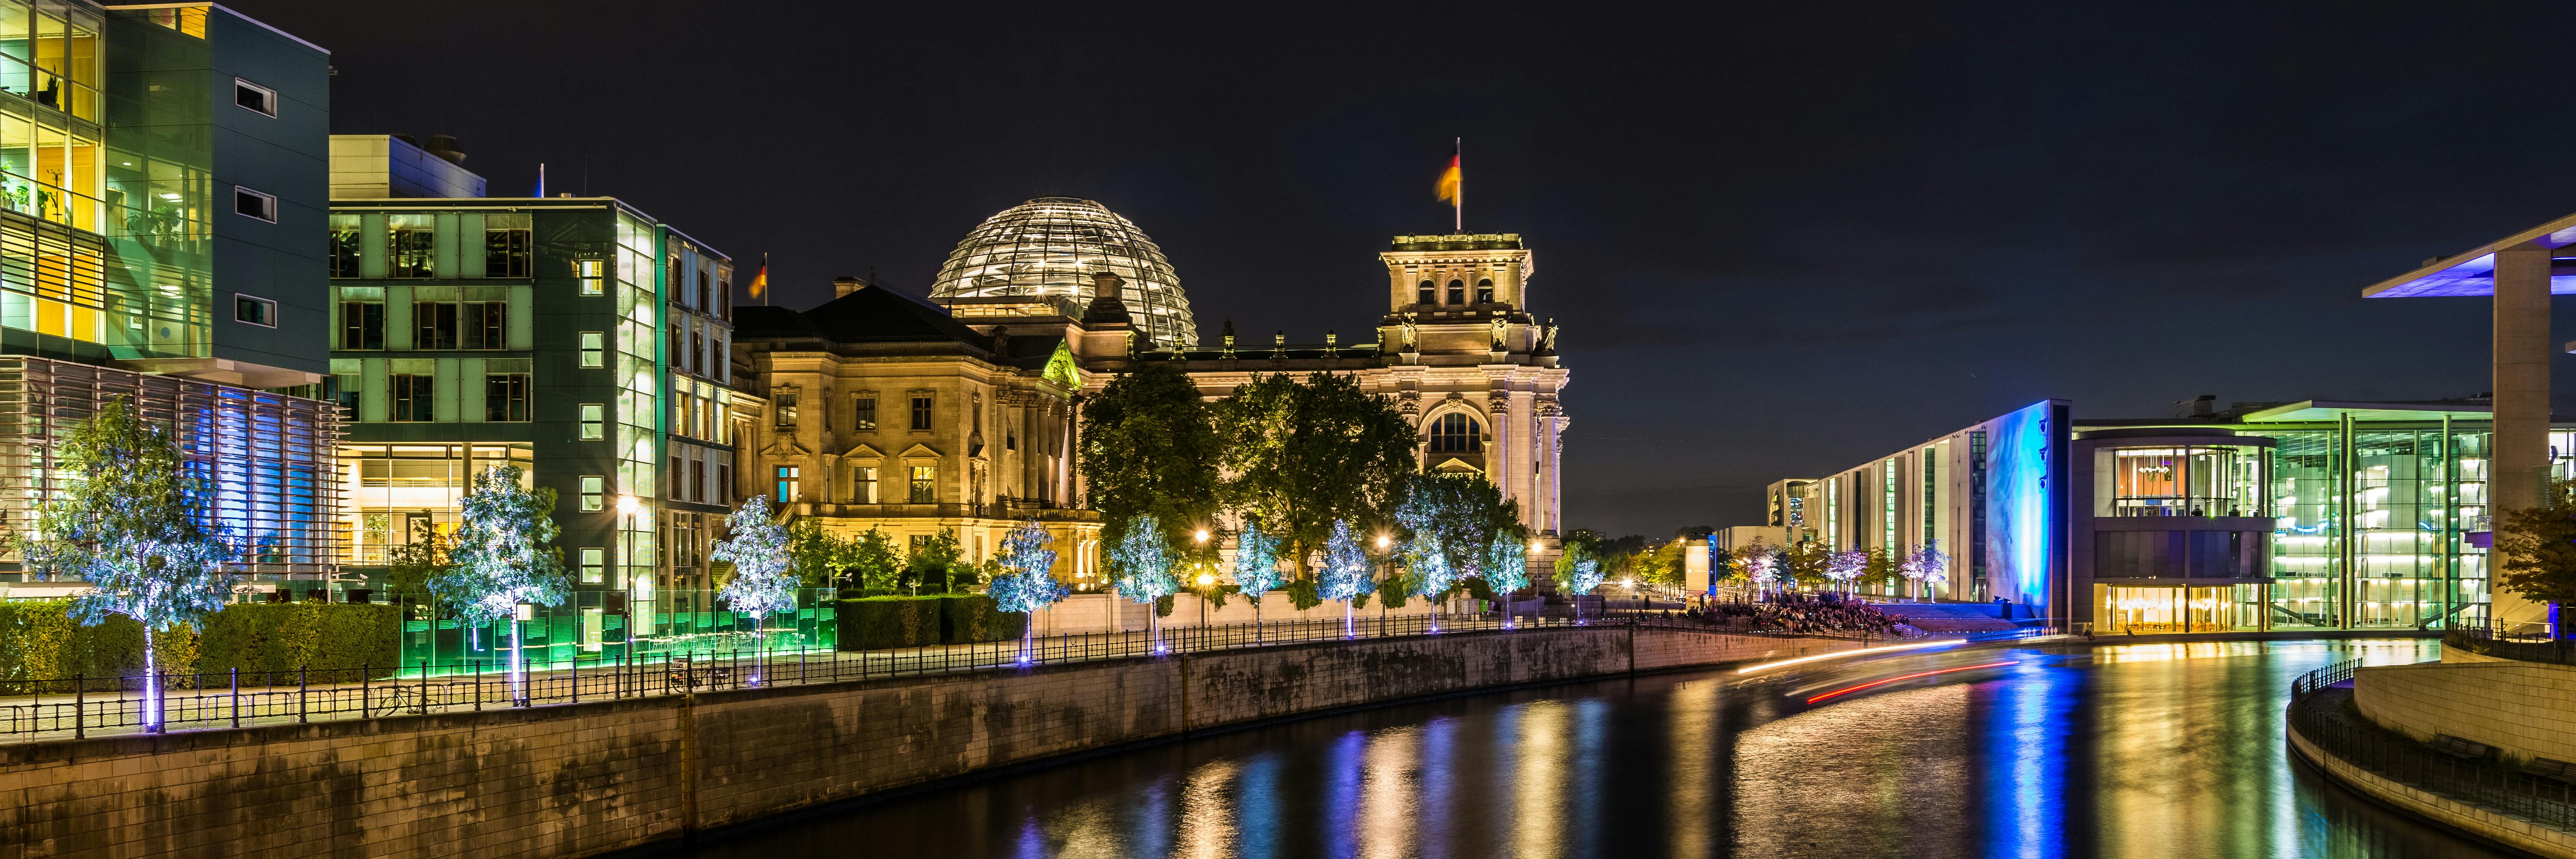 Cruzeiro fluvial noturno em Berlim